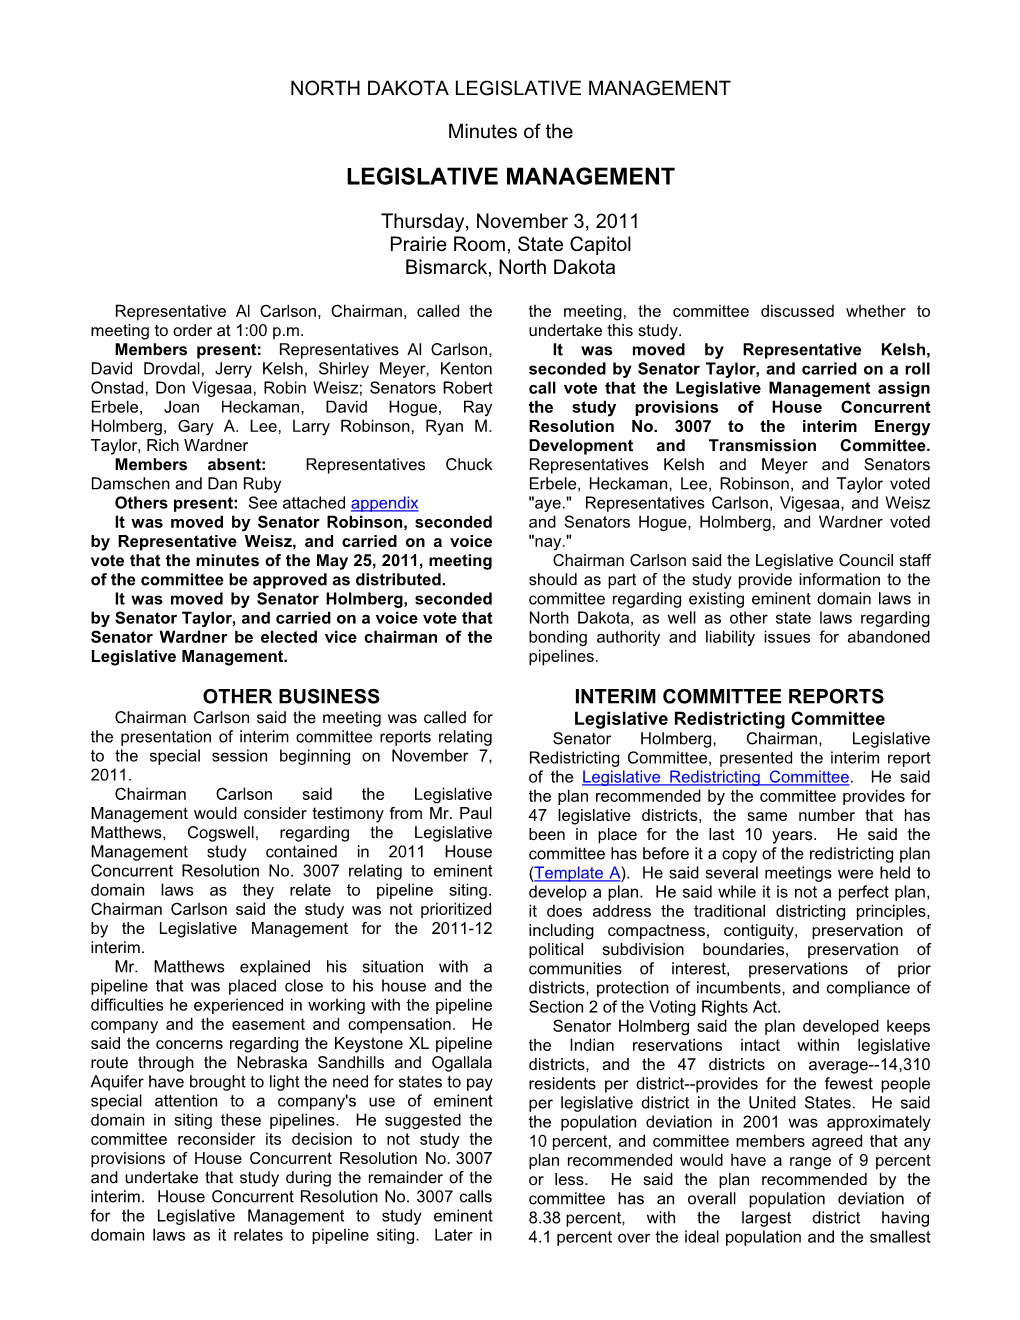 Legislative Management